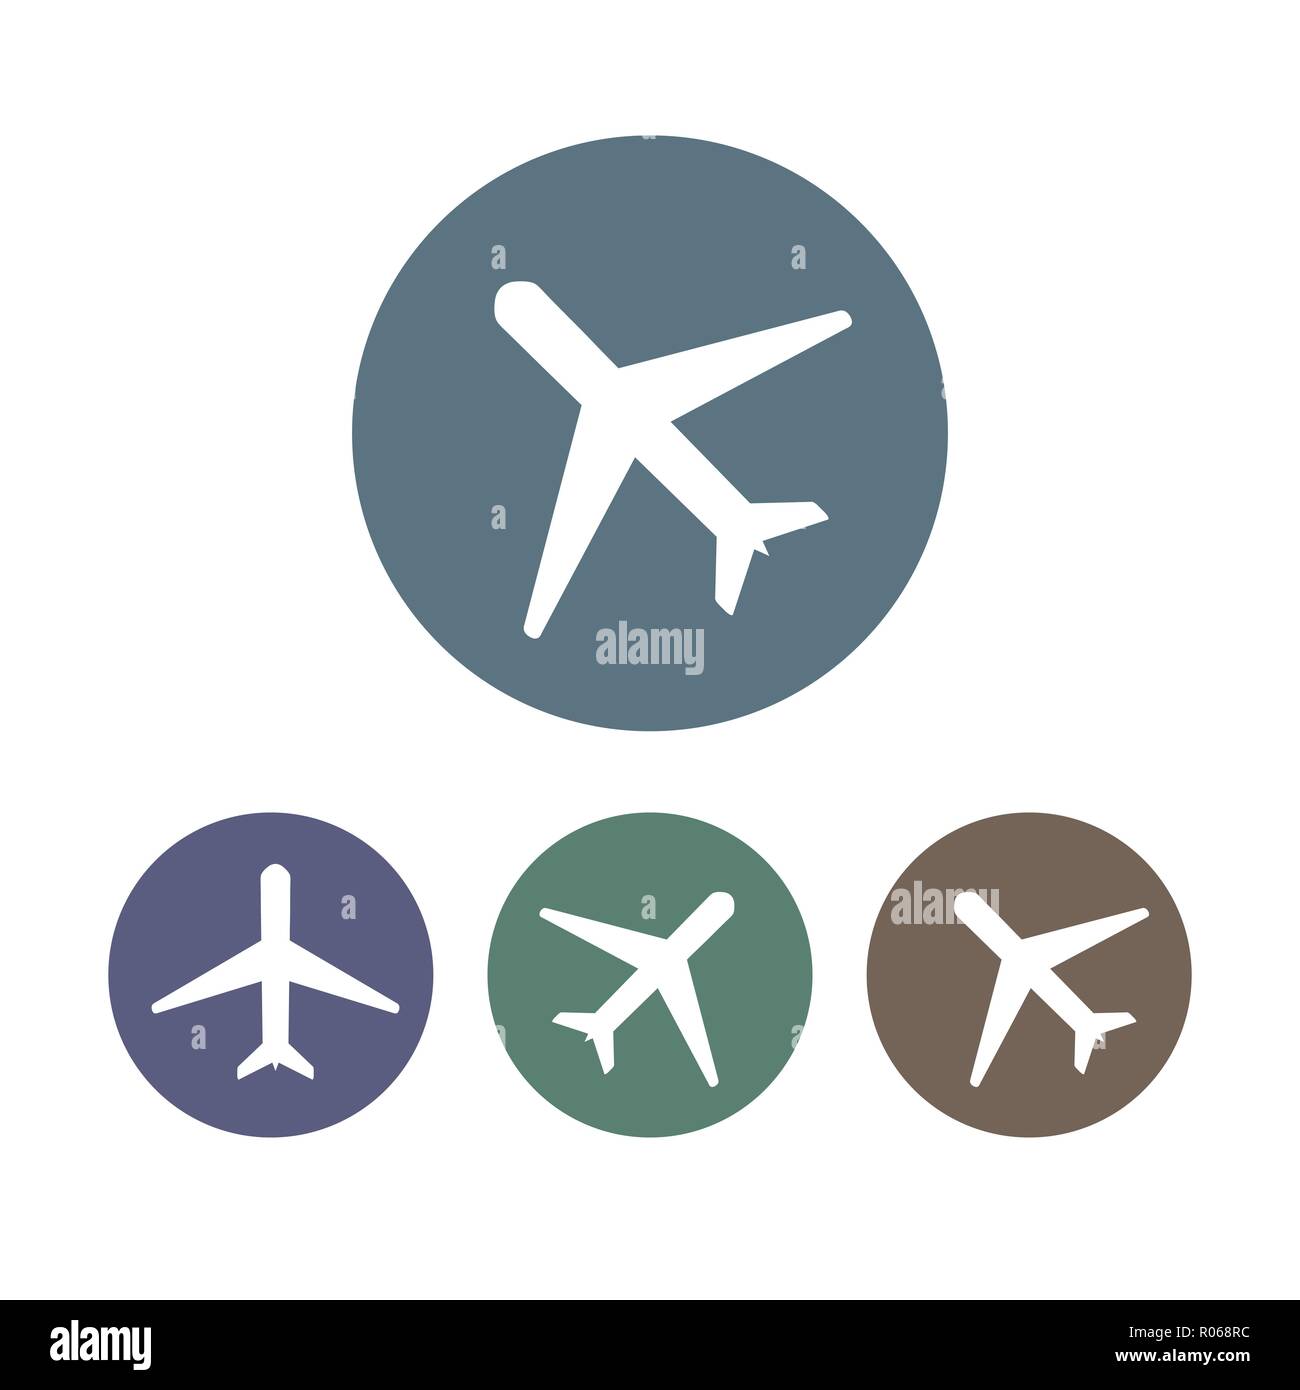 Airplane icon, plane sign. Set. Vector illustration, flat design. Stock Vector